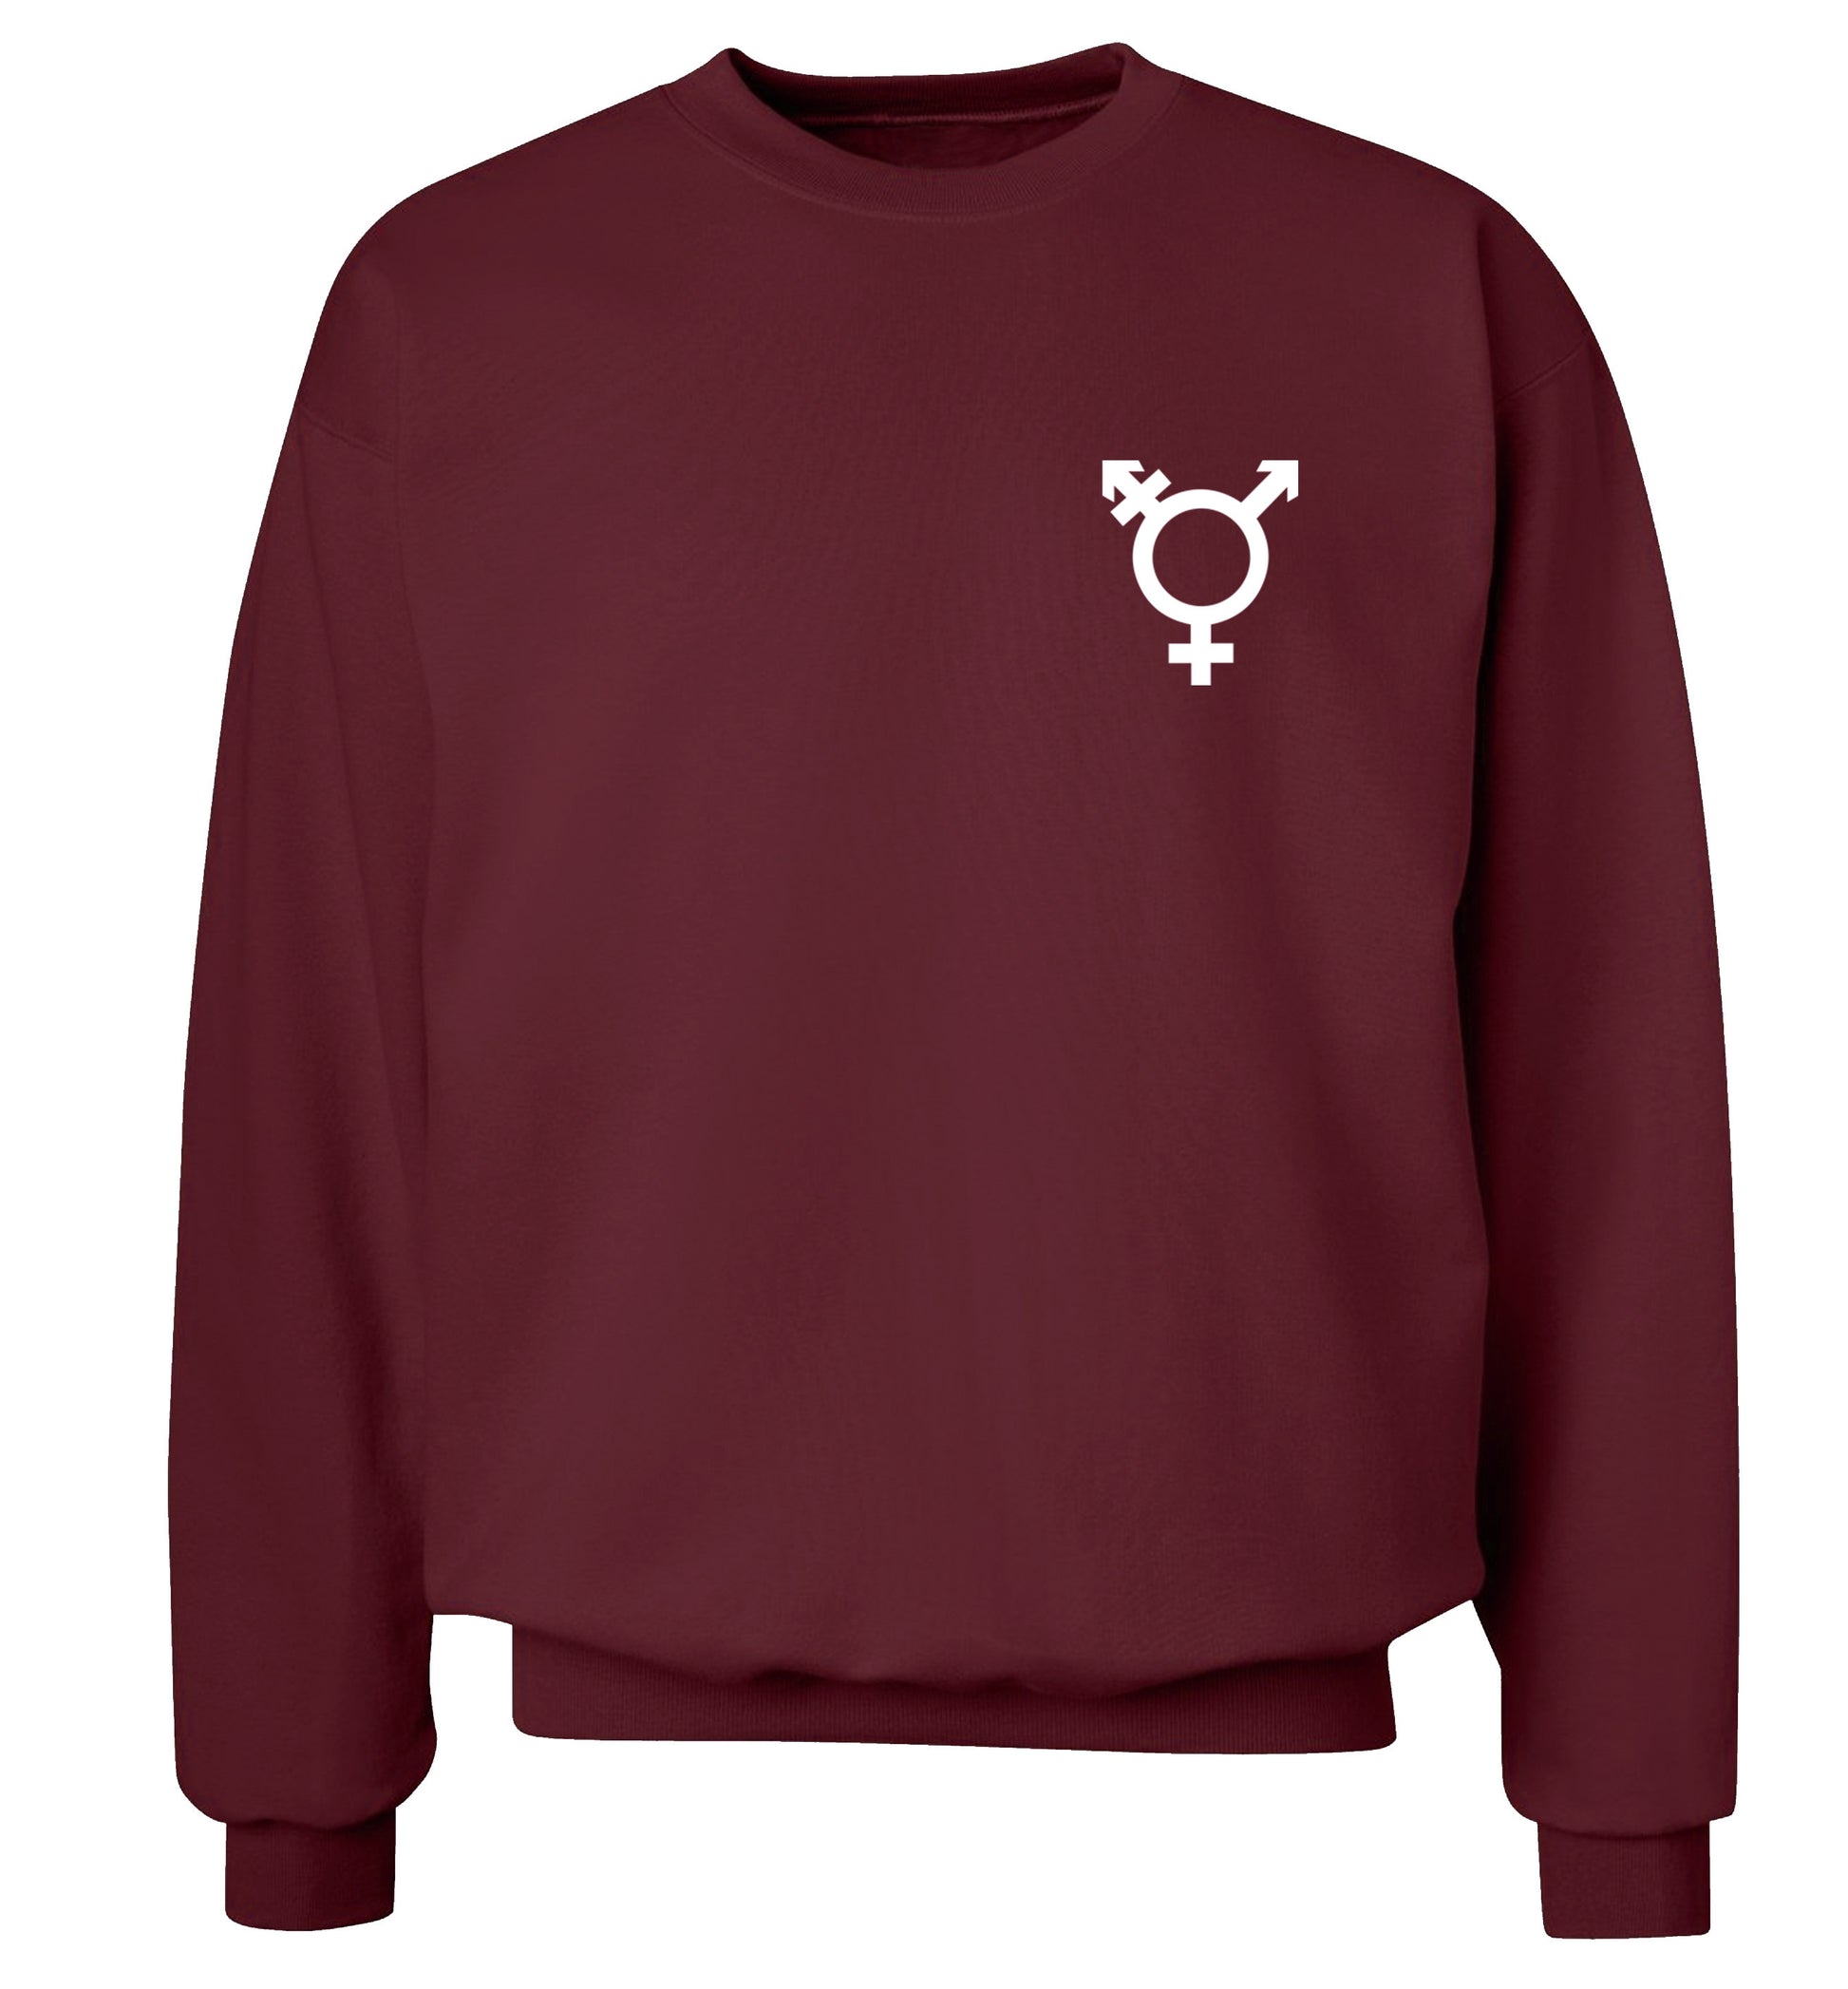 Trans gender symbol pocket Adult's unisex maroon Sweater 2XL